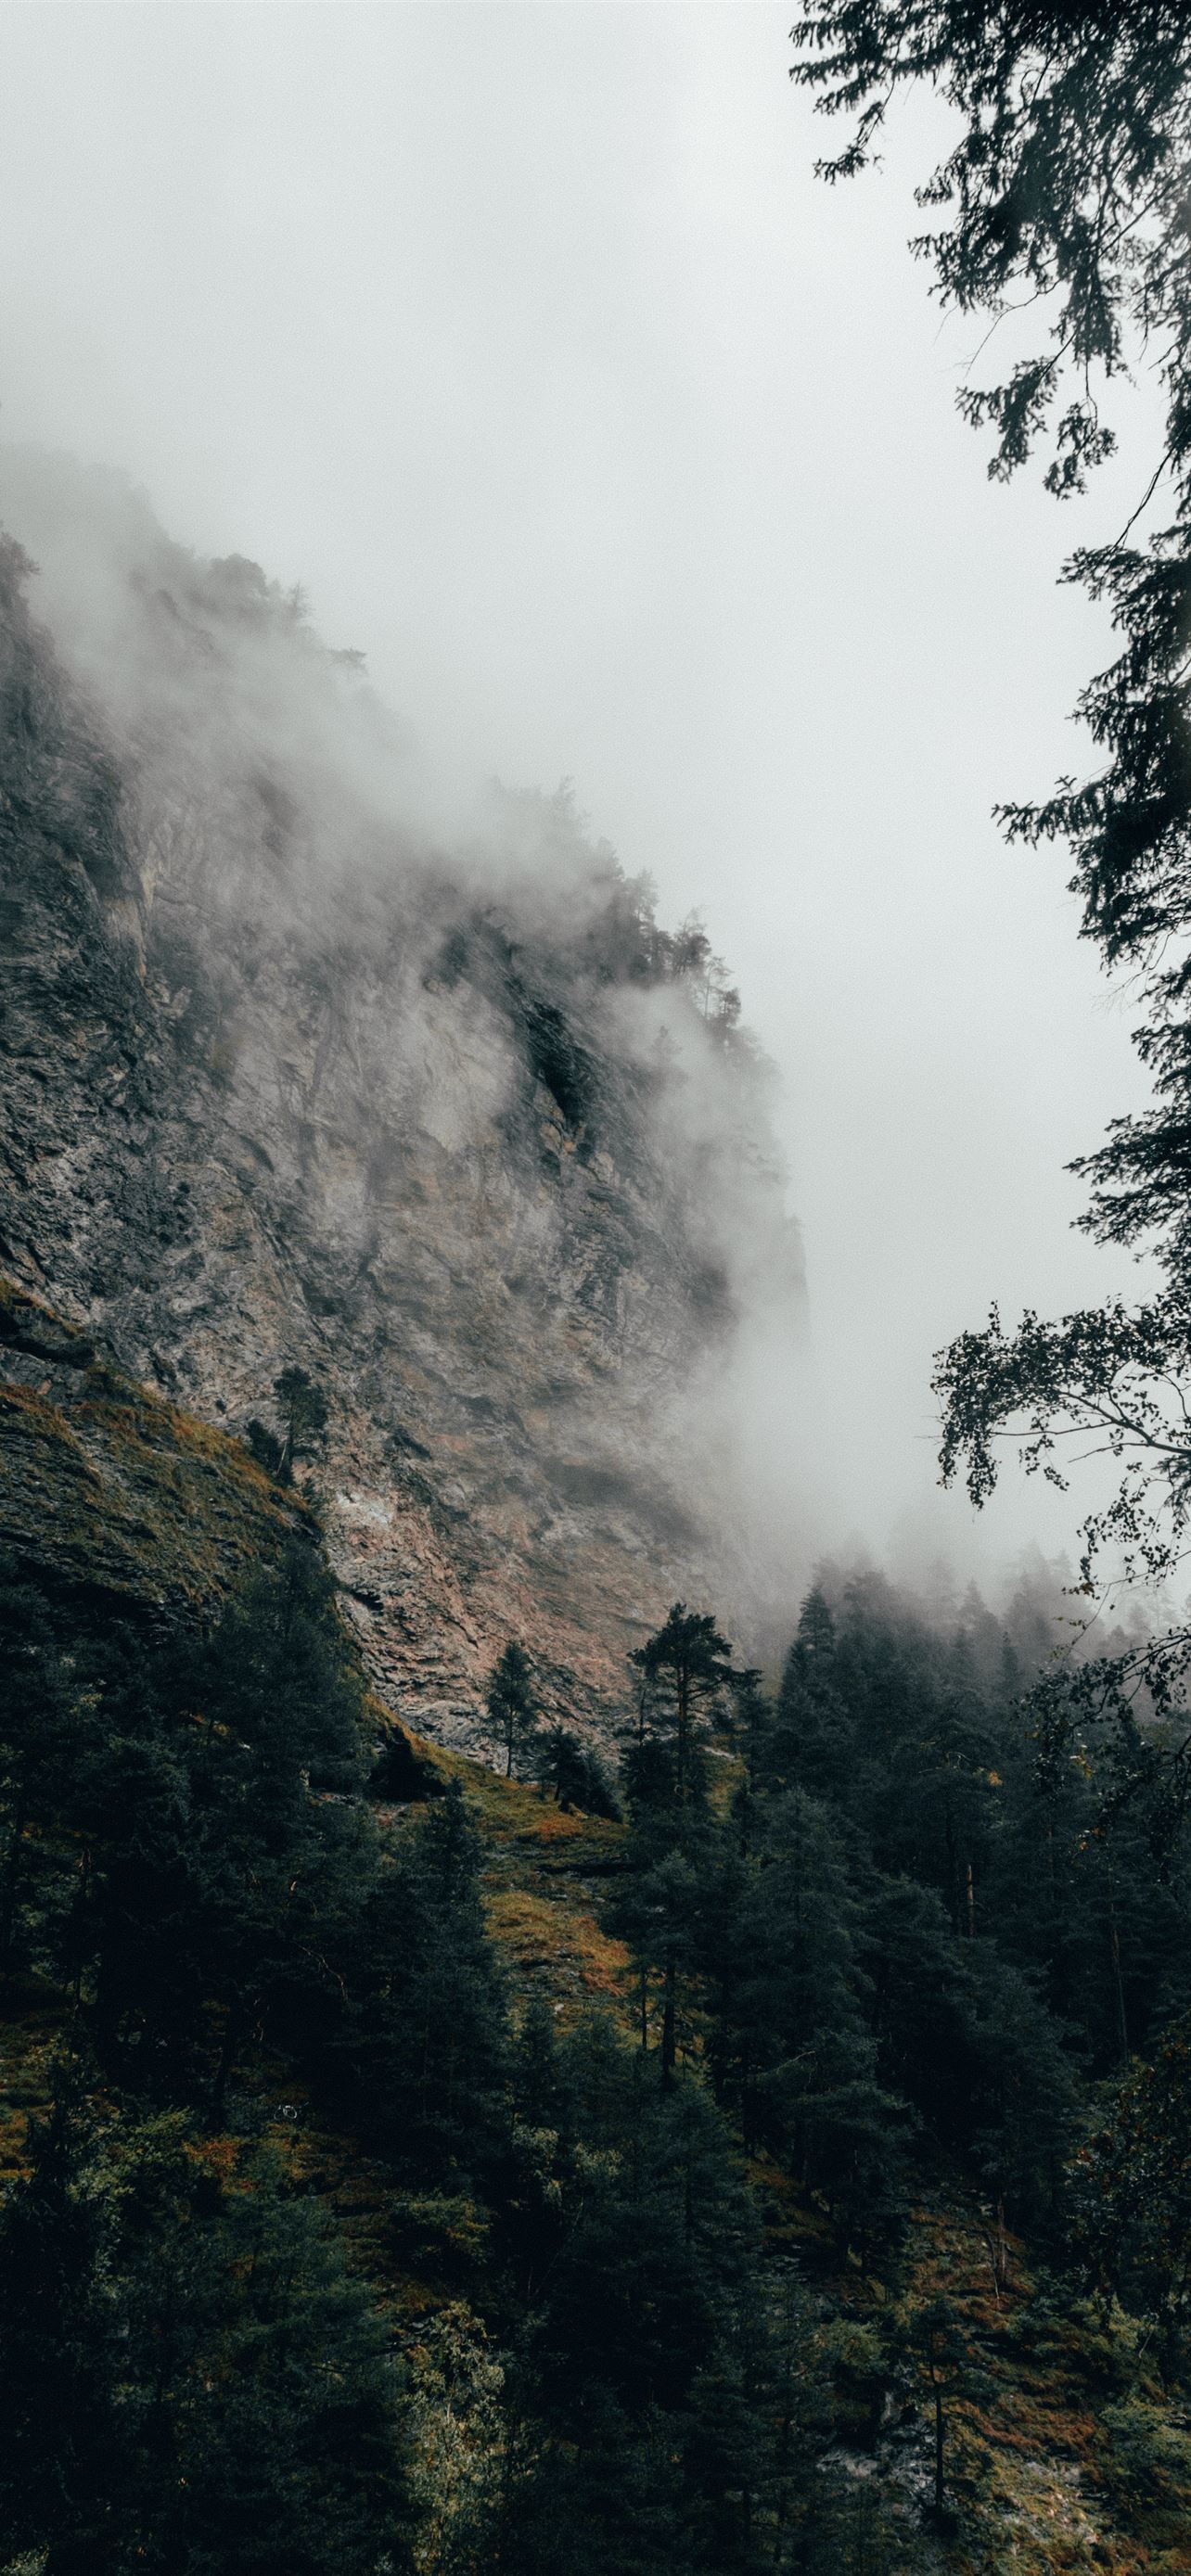 A foggy mountain with trees and a gray sky - Fog